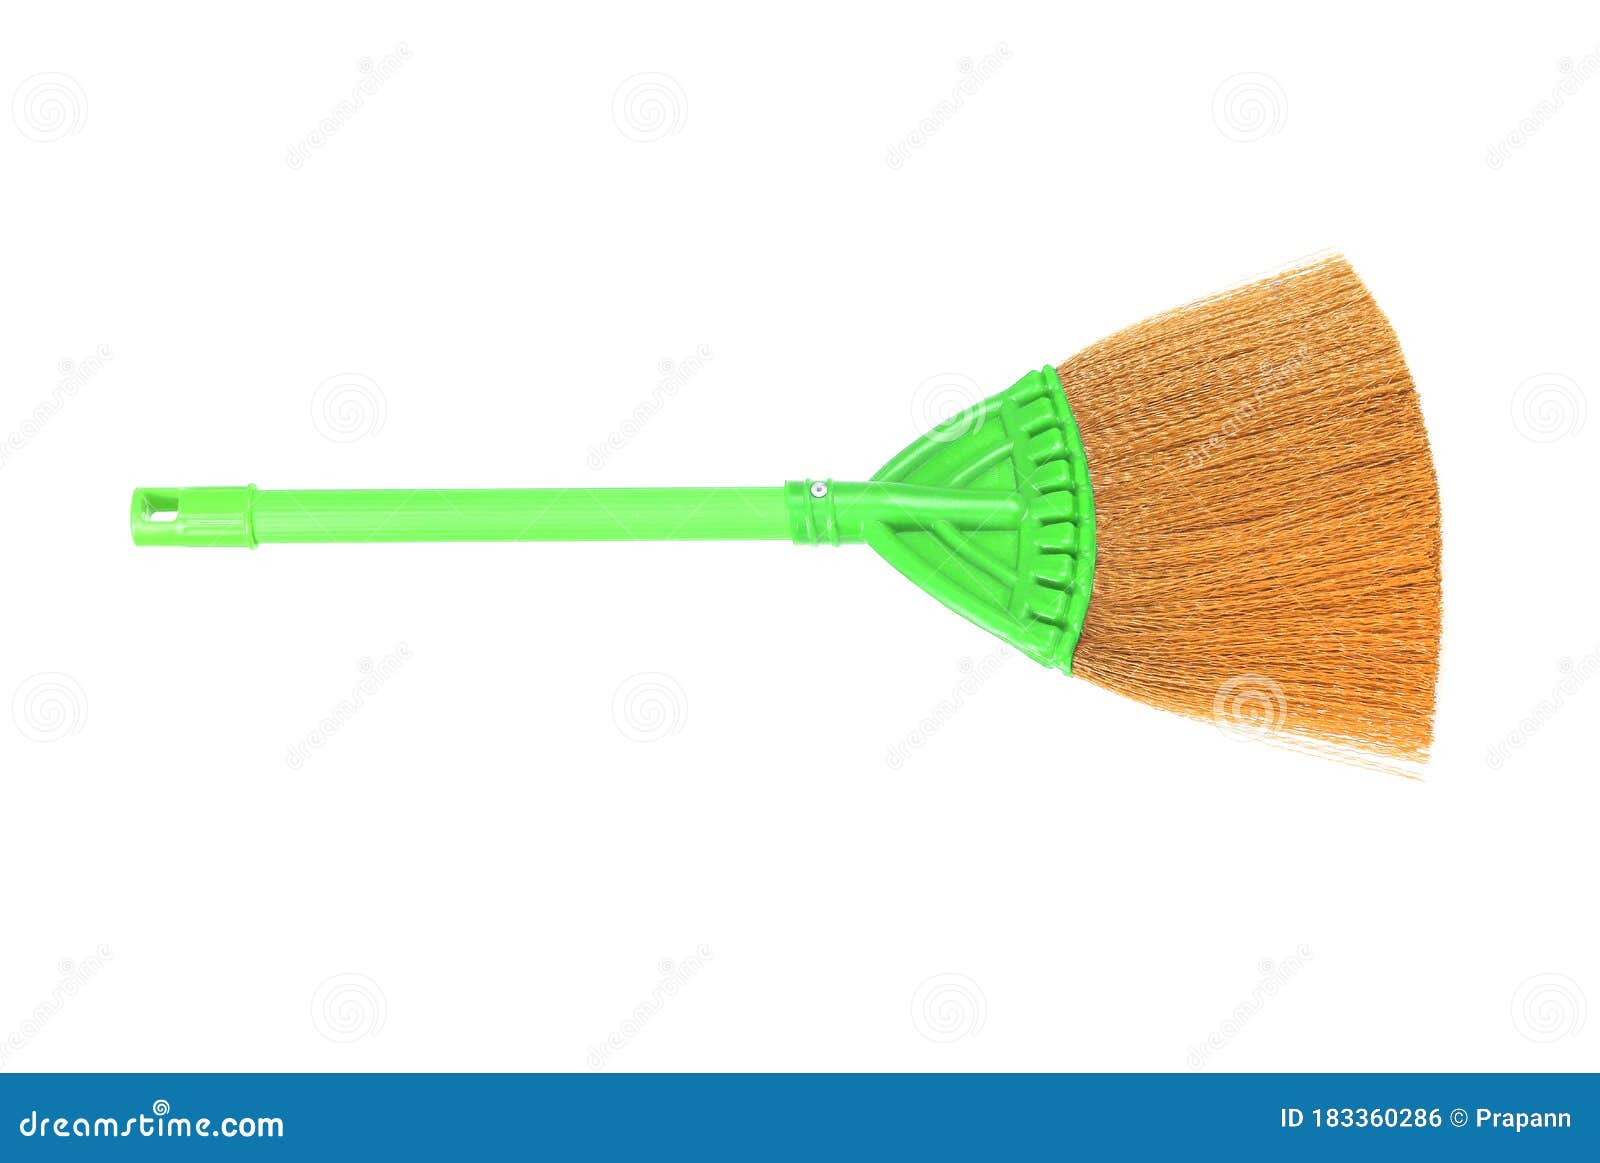 rea broom on white background